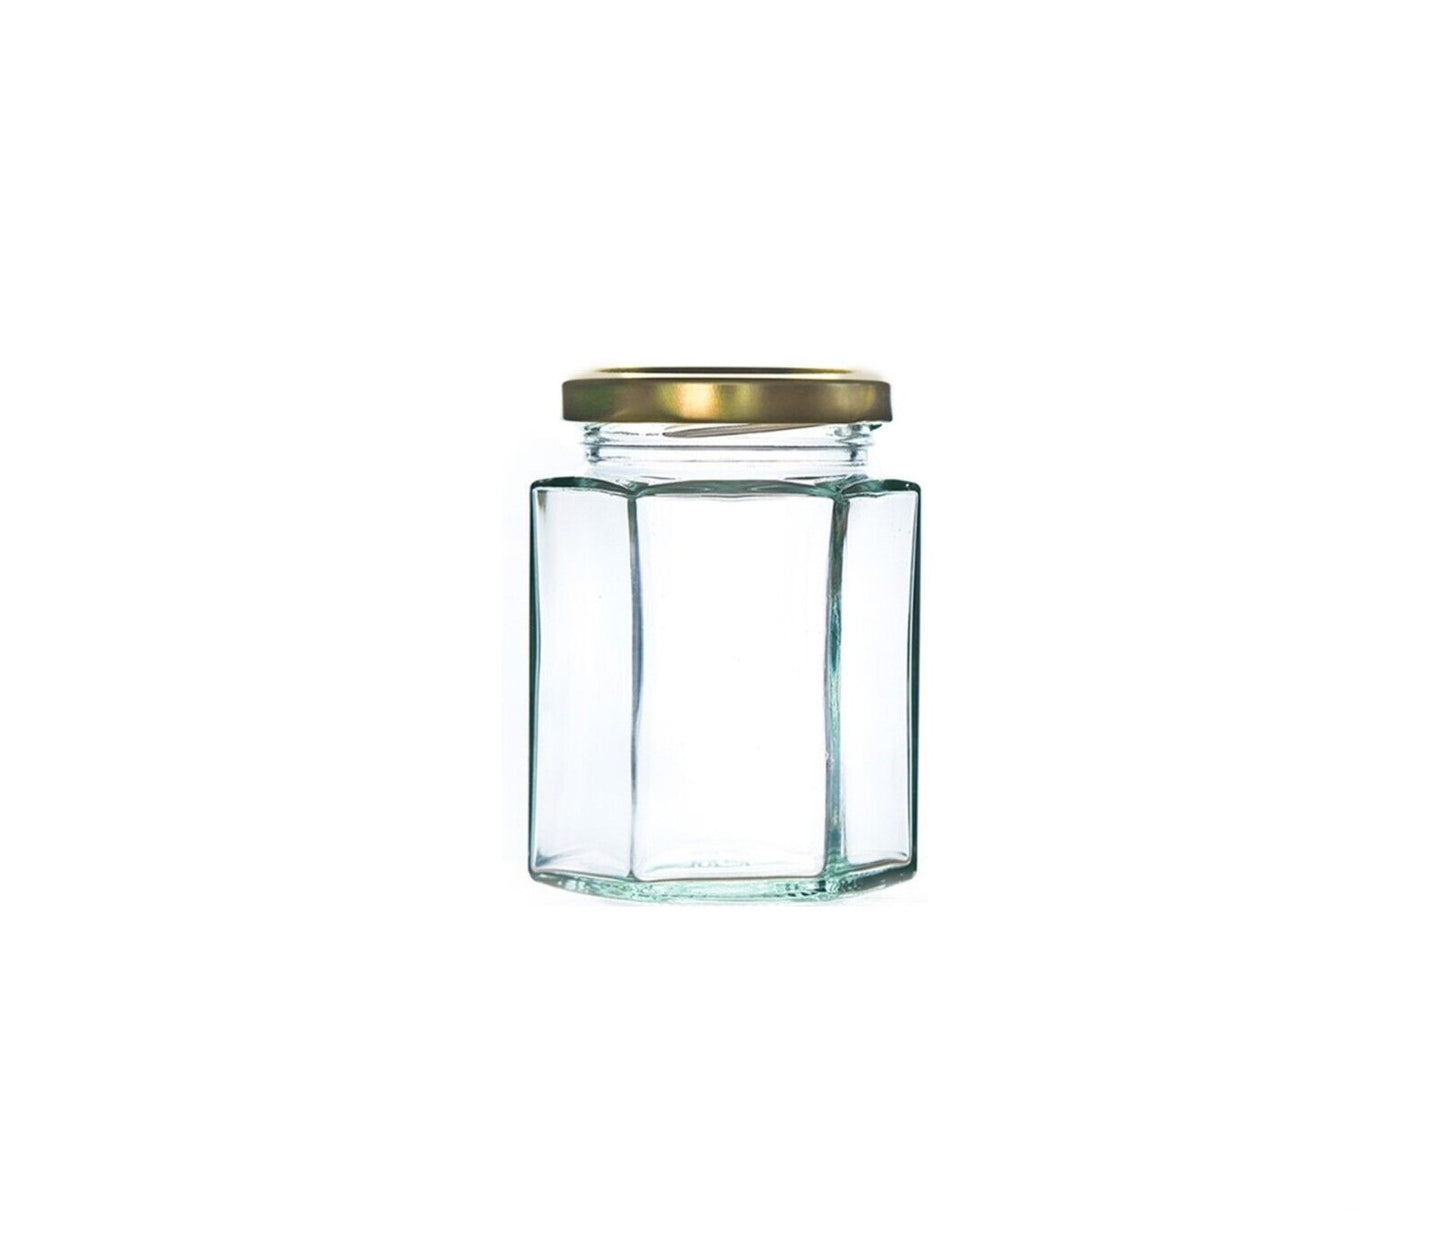 Hexagonal Glass Jam Jars 280ml (340g) Honey Jars with Gold Lid - 6 Pack